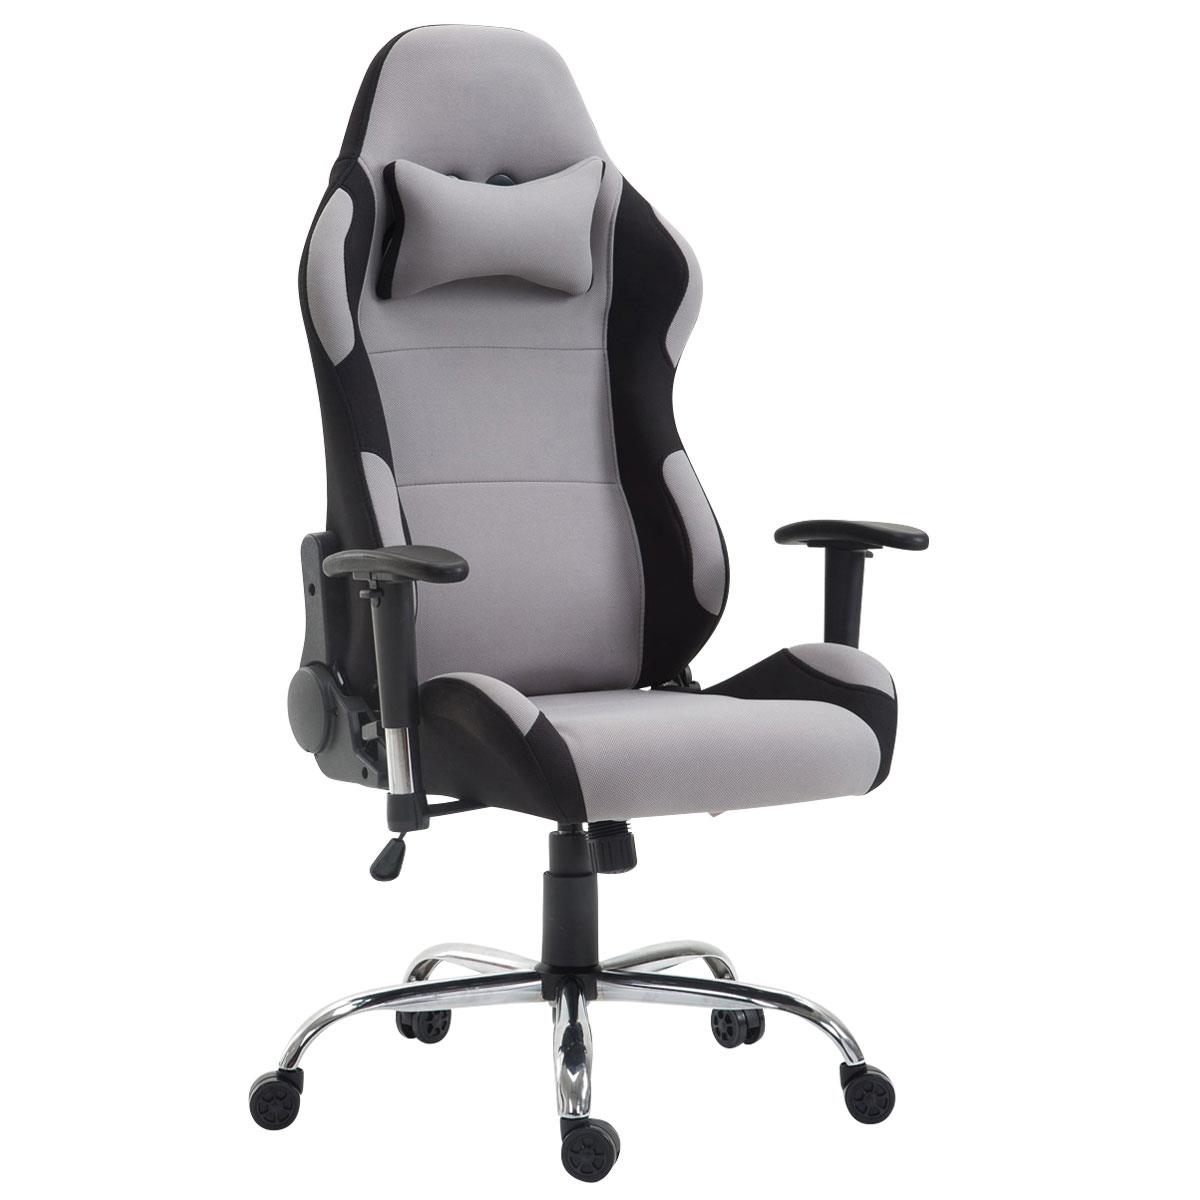 Cadeira Gaming ROSBY PANO, Design Desportivo e Muito Confortável, Cor Cinza